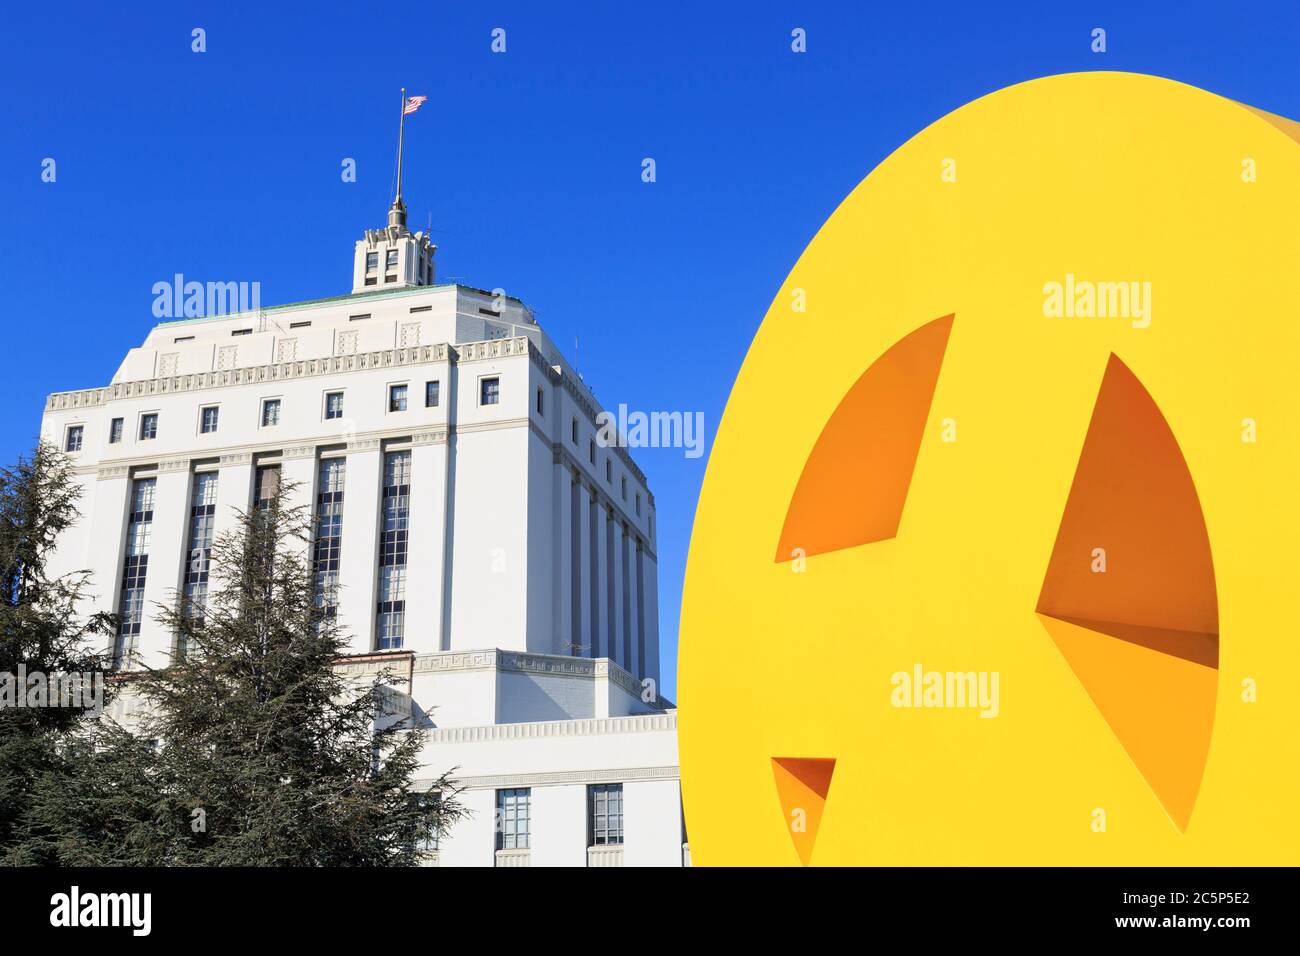 Alameda County Court House & sculpture by Tony Lambat,Oakland,California,USA Stock Photo